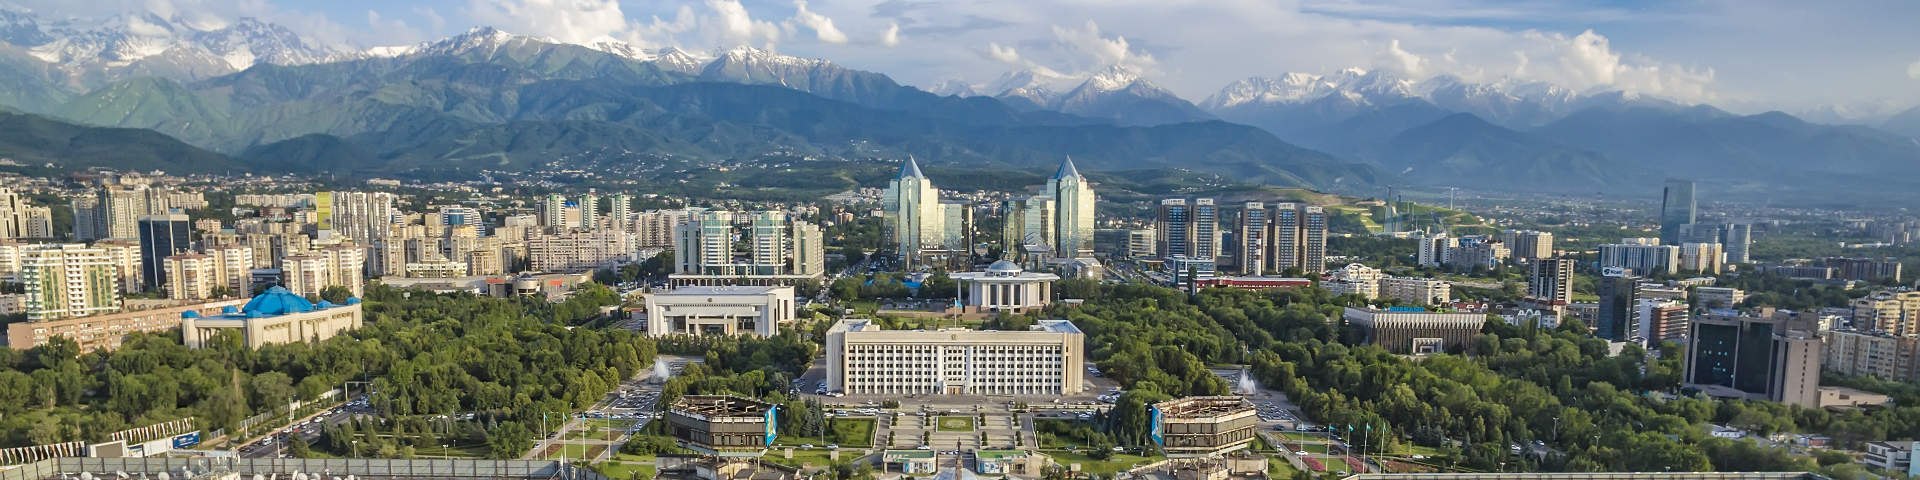 Almaty hero banner 2